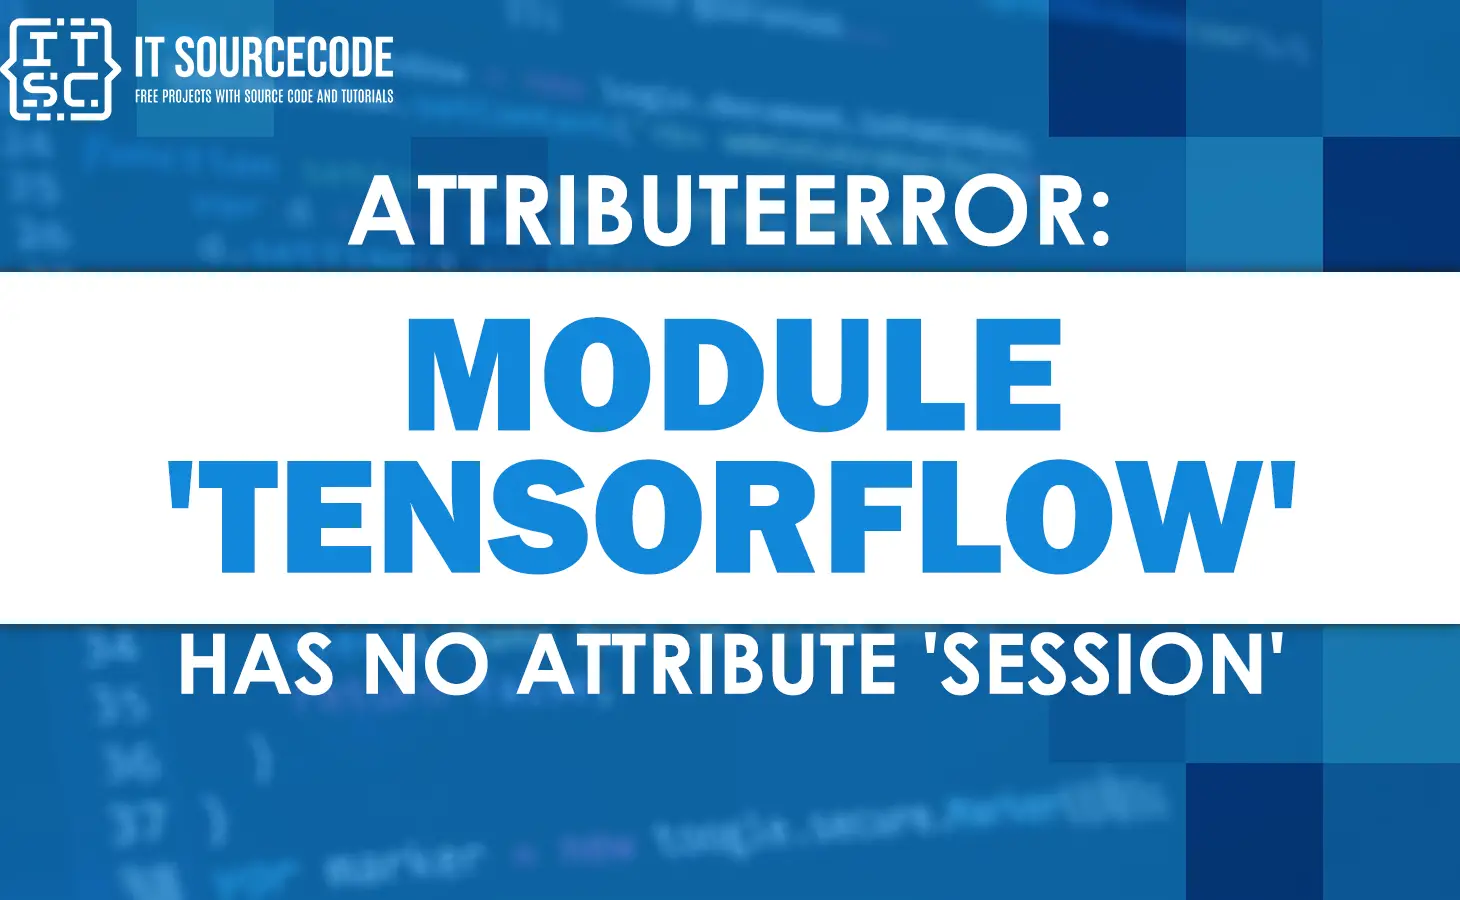 Attributeerror module: 'tensorflow' has no attribute 'session'